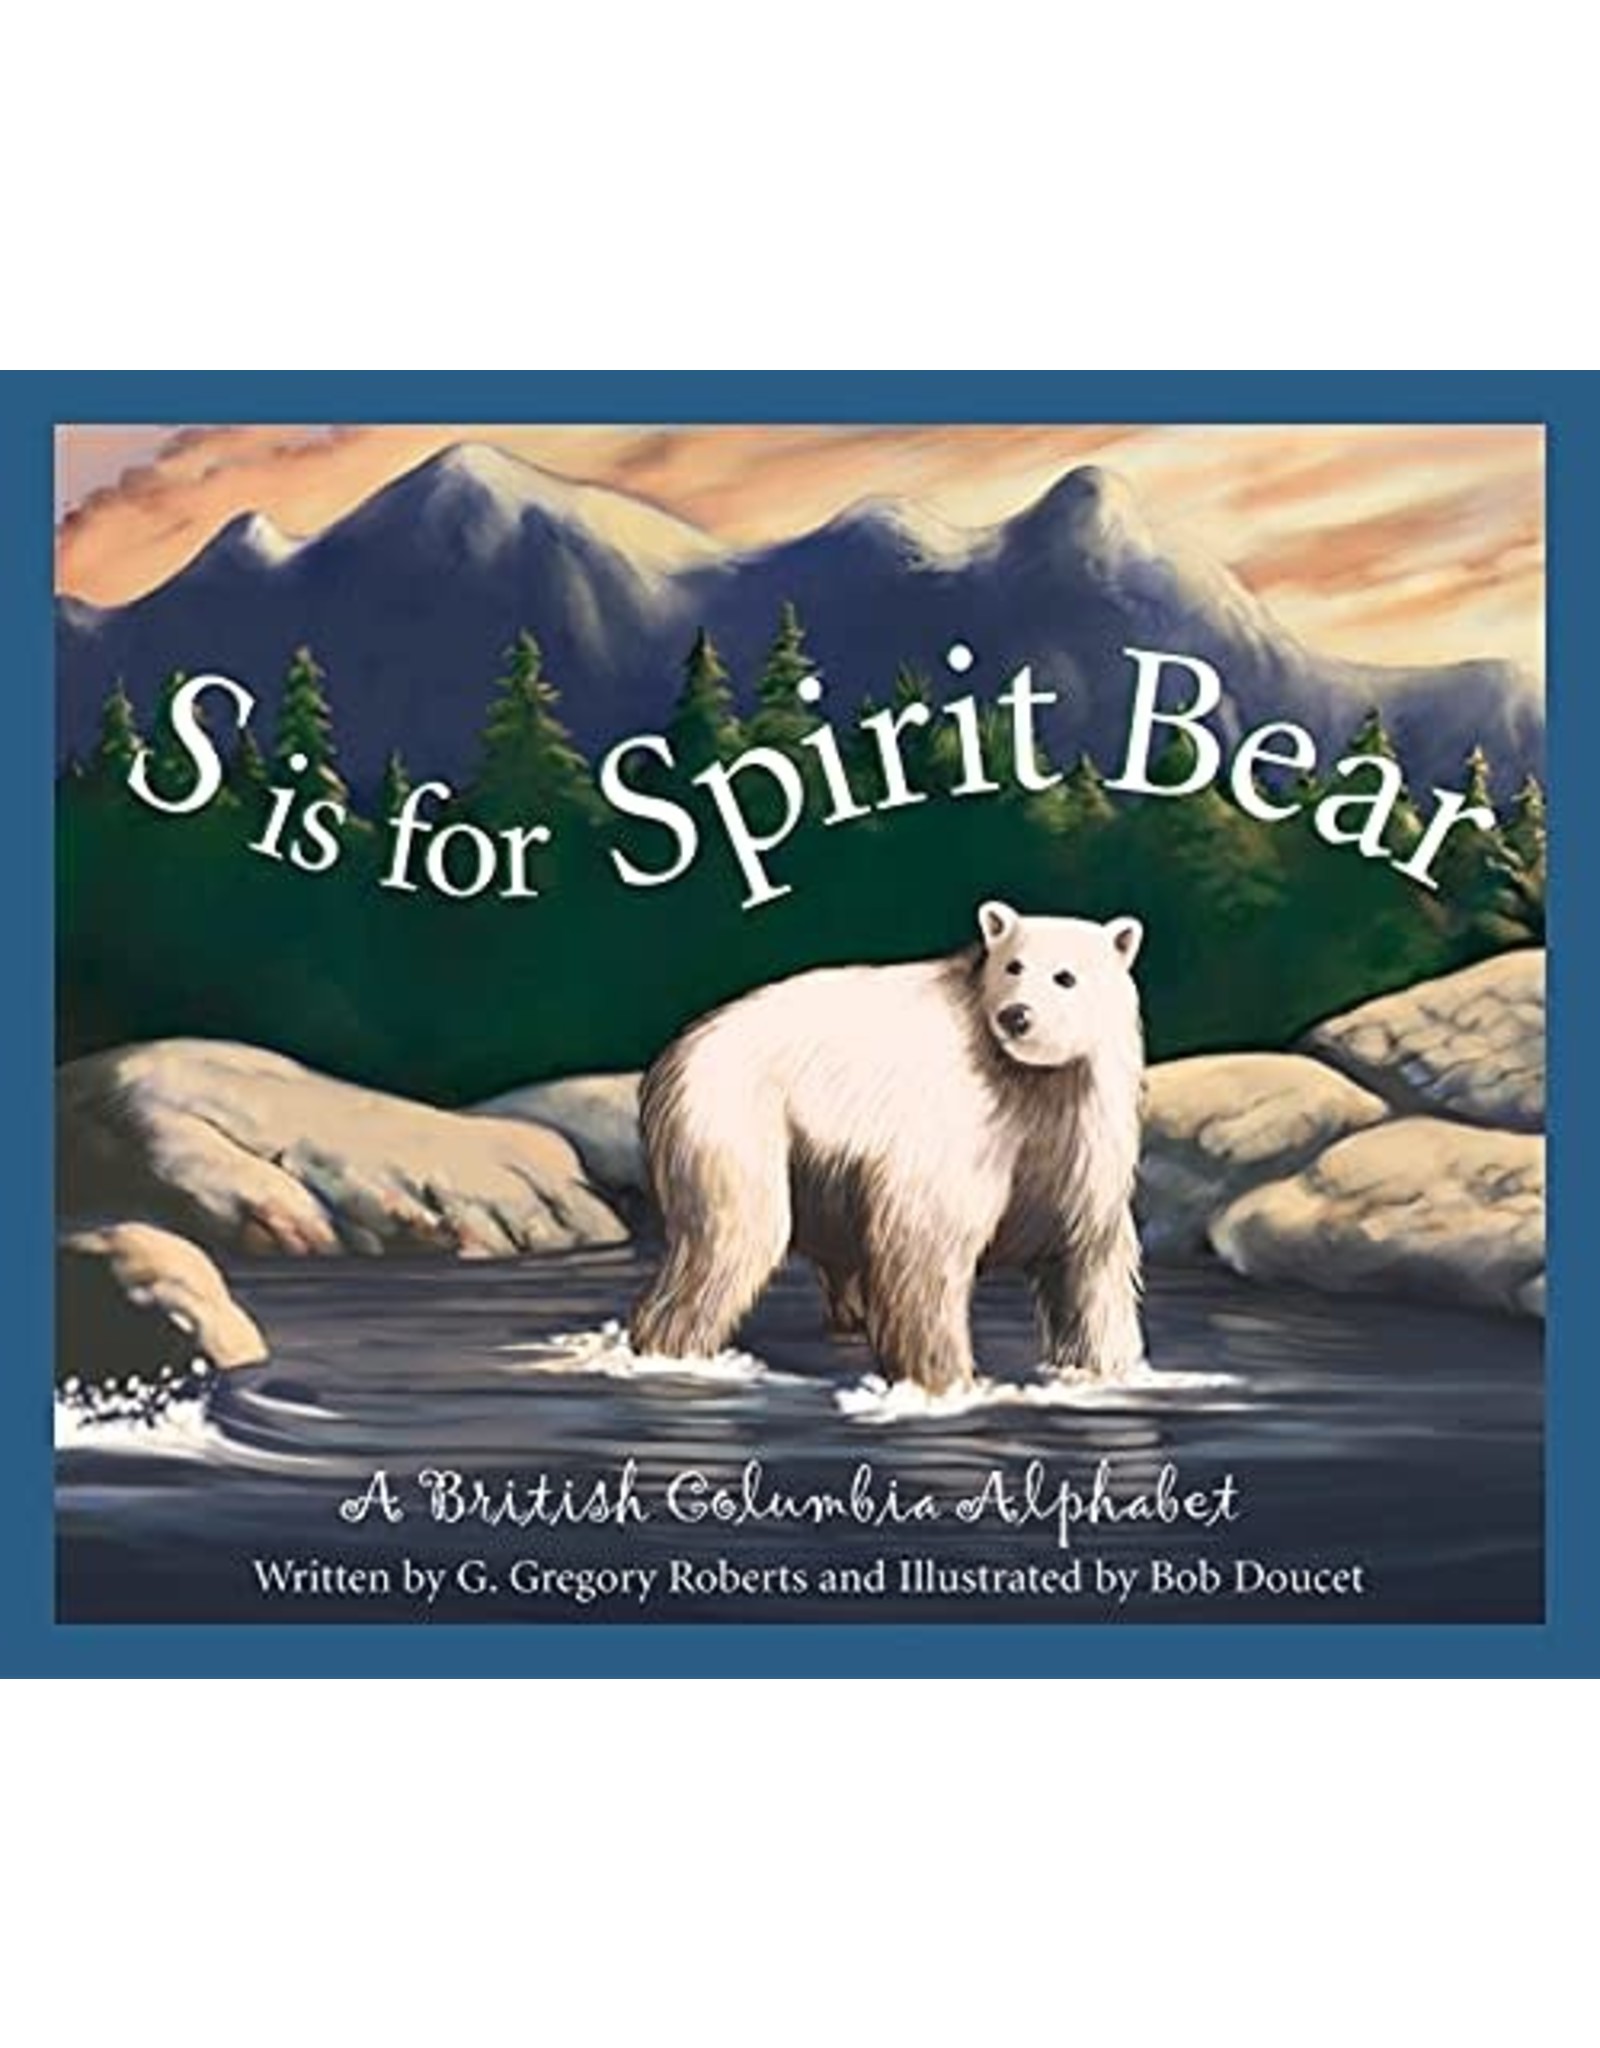 S is for Spirit Bear: A British Columbia Alphabet